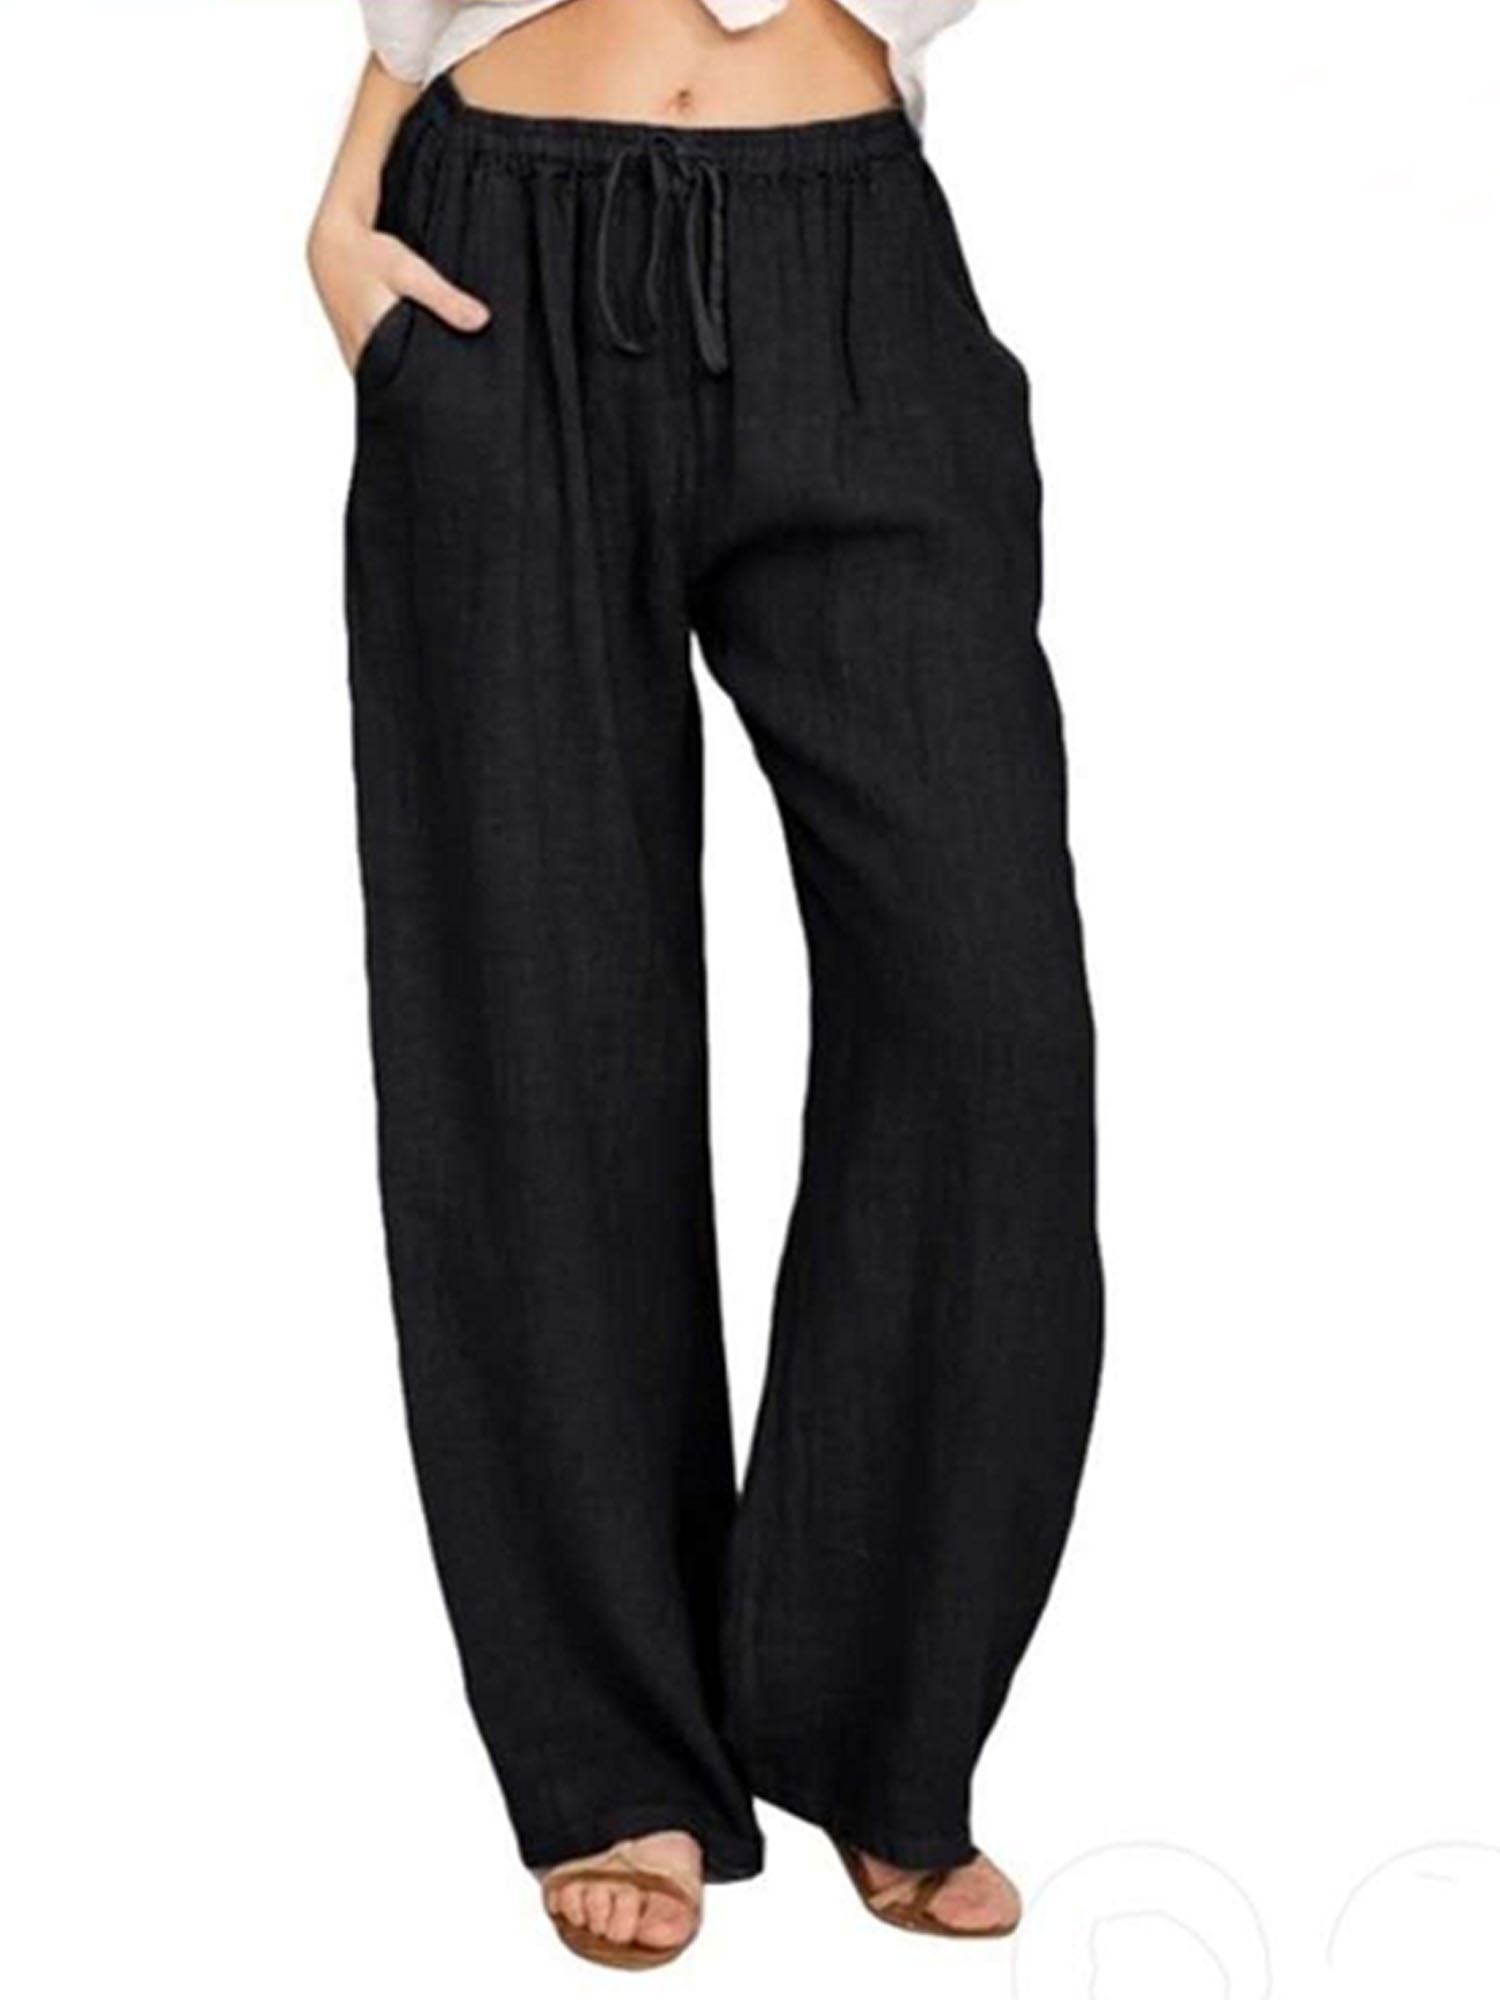 SHOPESSA Harem Sweatpants for Women Boho Cotton Linen Capri Pants Y2K Pocket Baggy Pants 